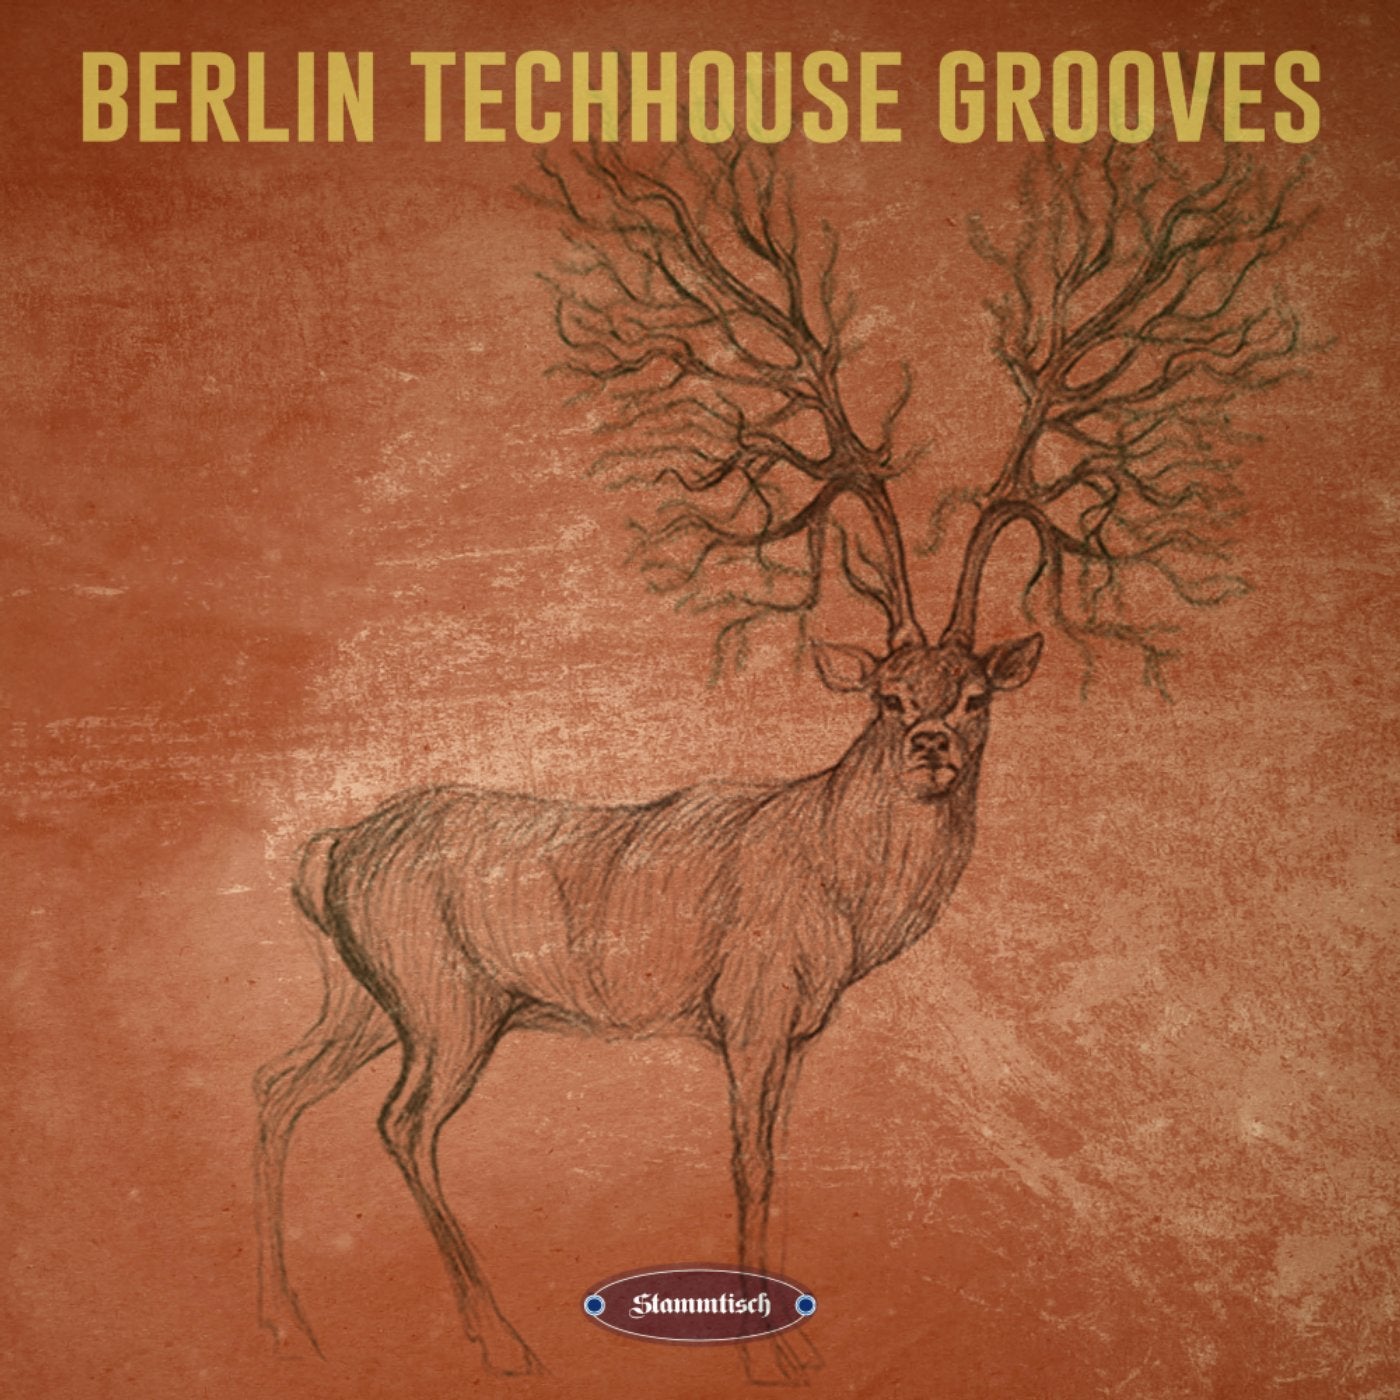 Berlin Techhouse Grooves